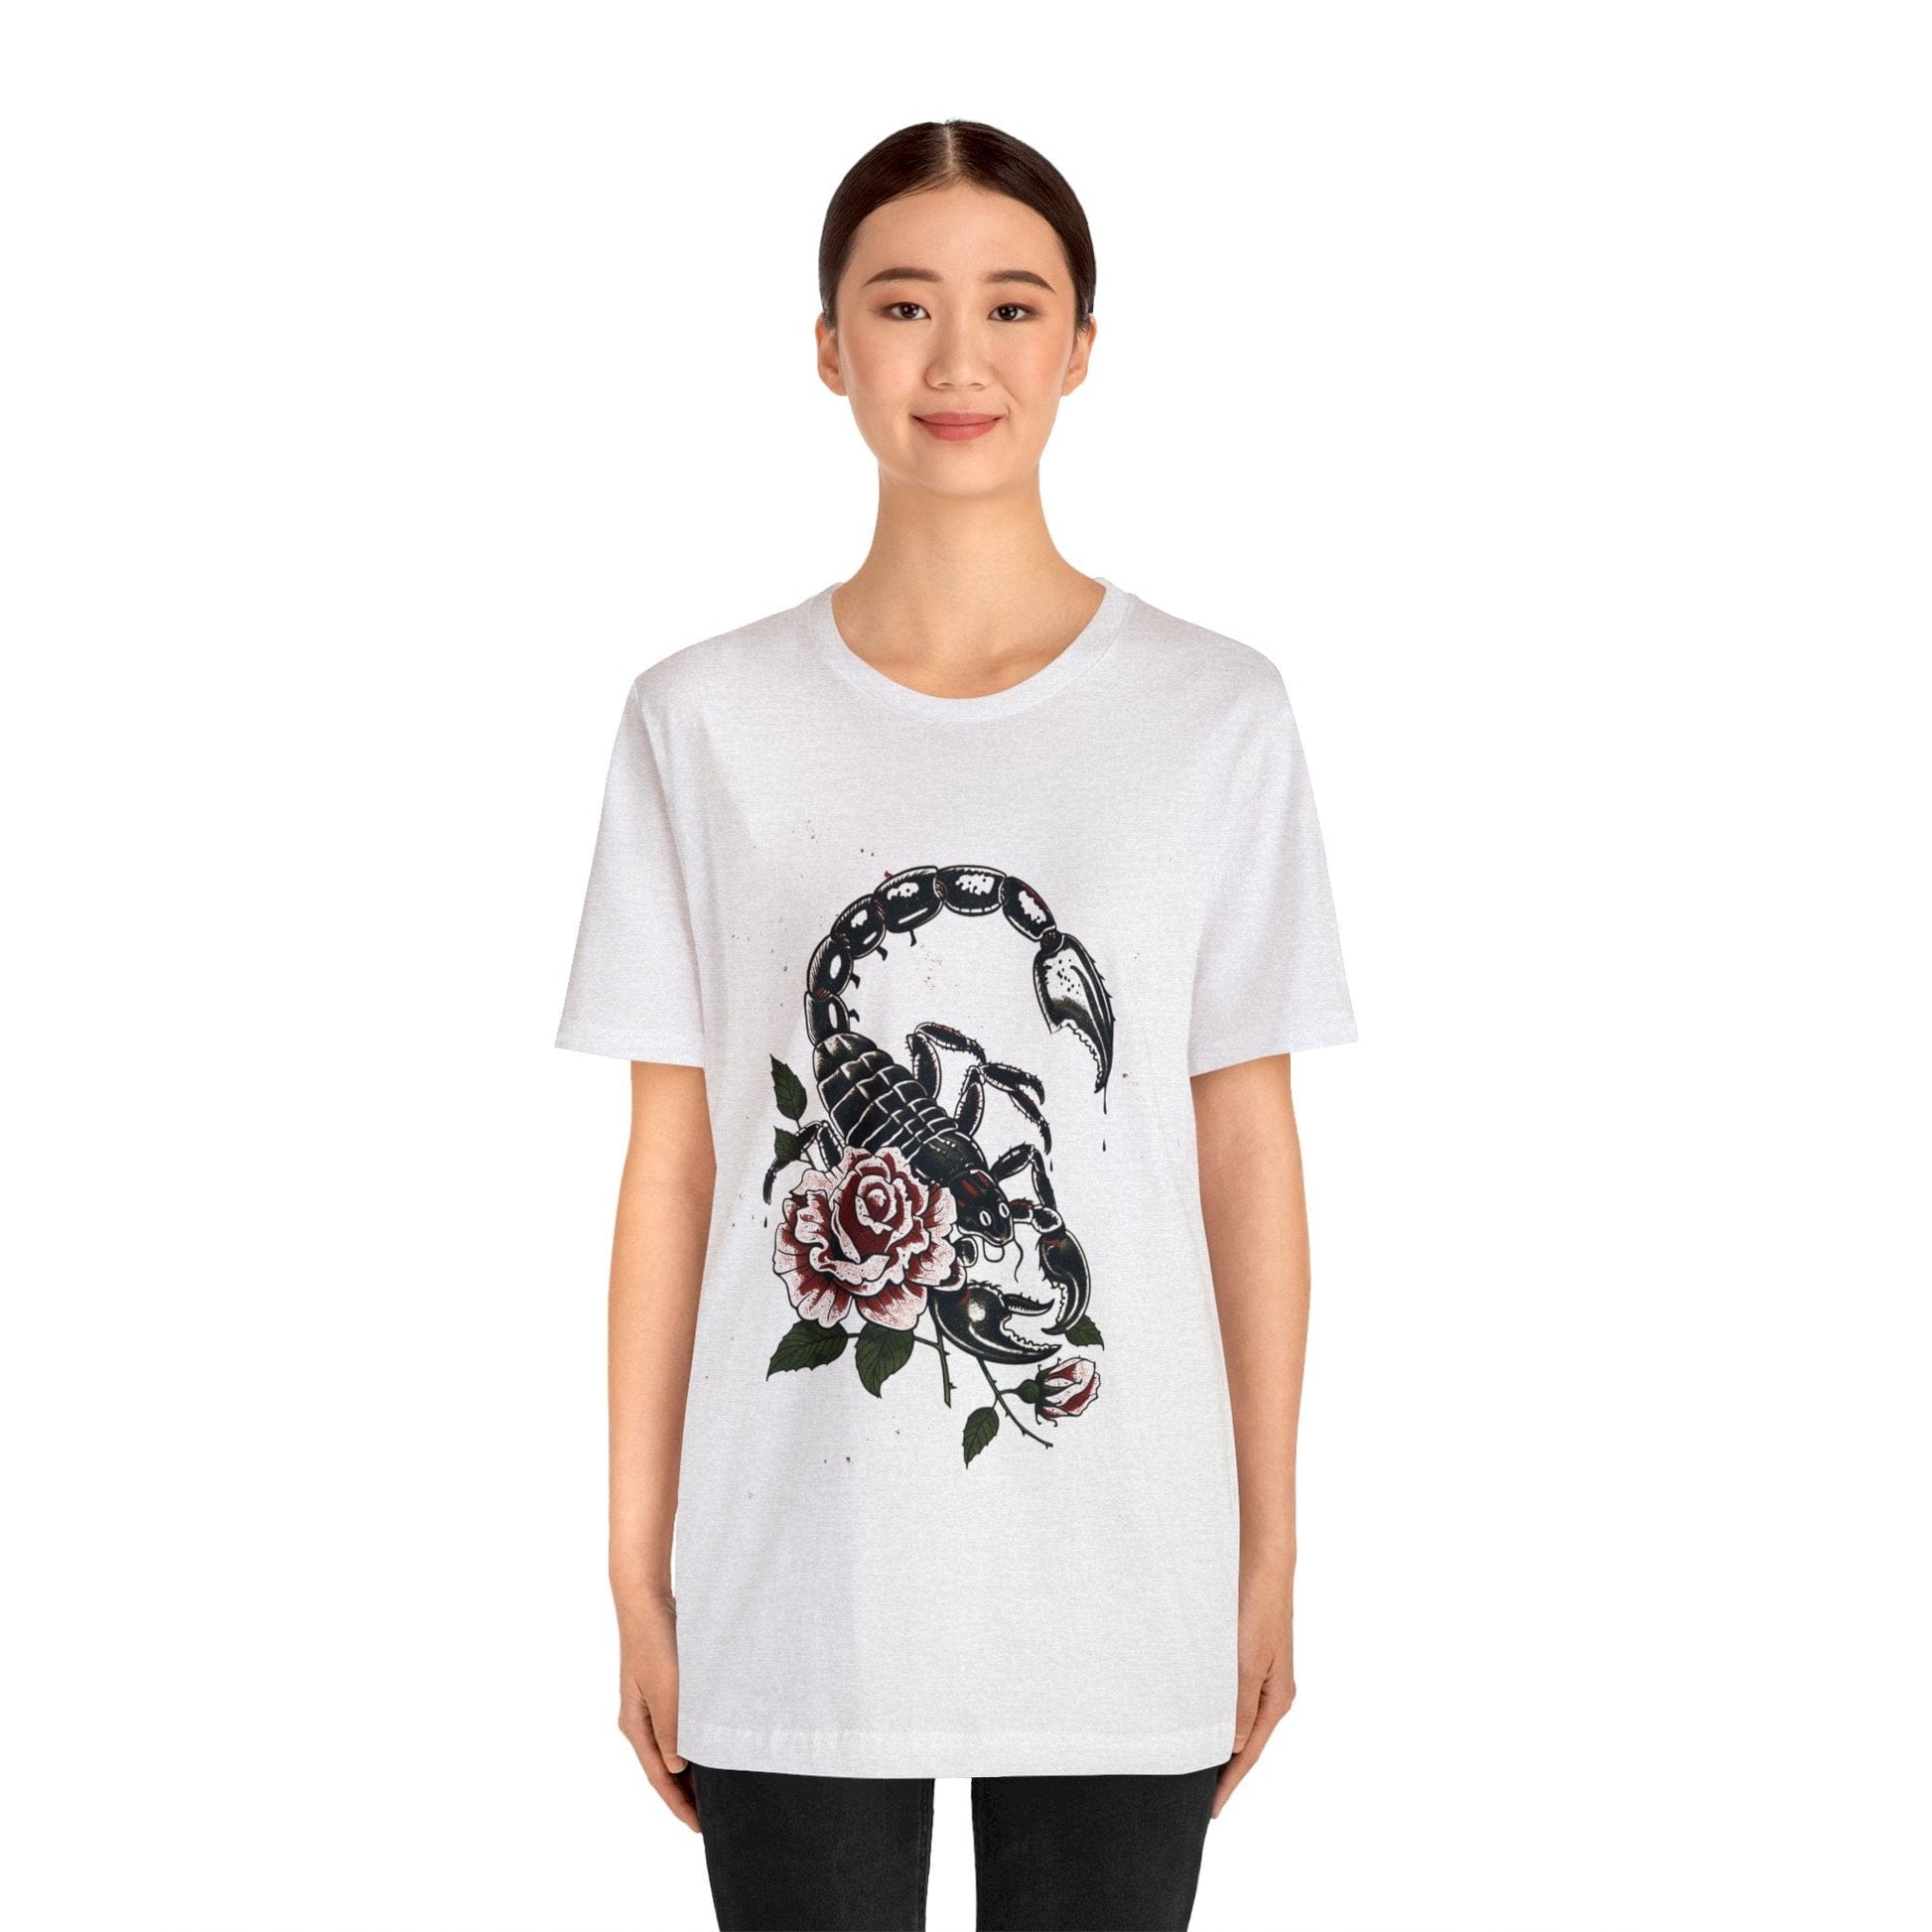 T-Shirt Scorpio's Essence TShirt: Mystical Scorpion Art on Soft Cotton